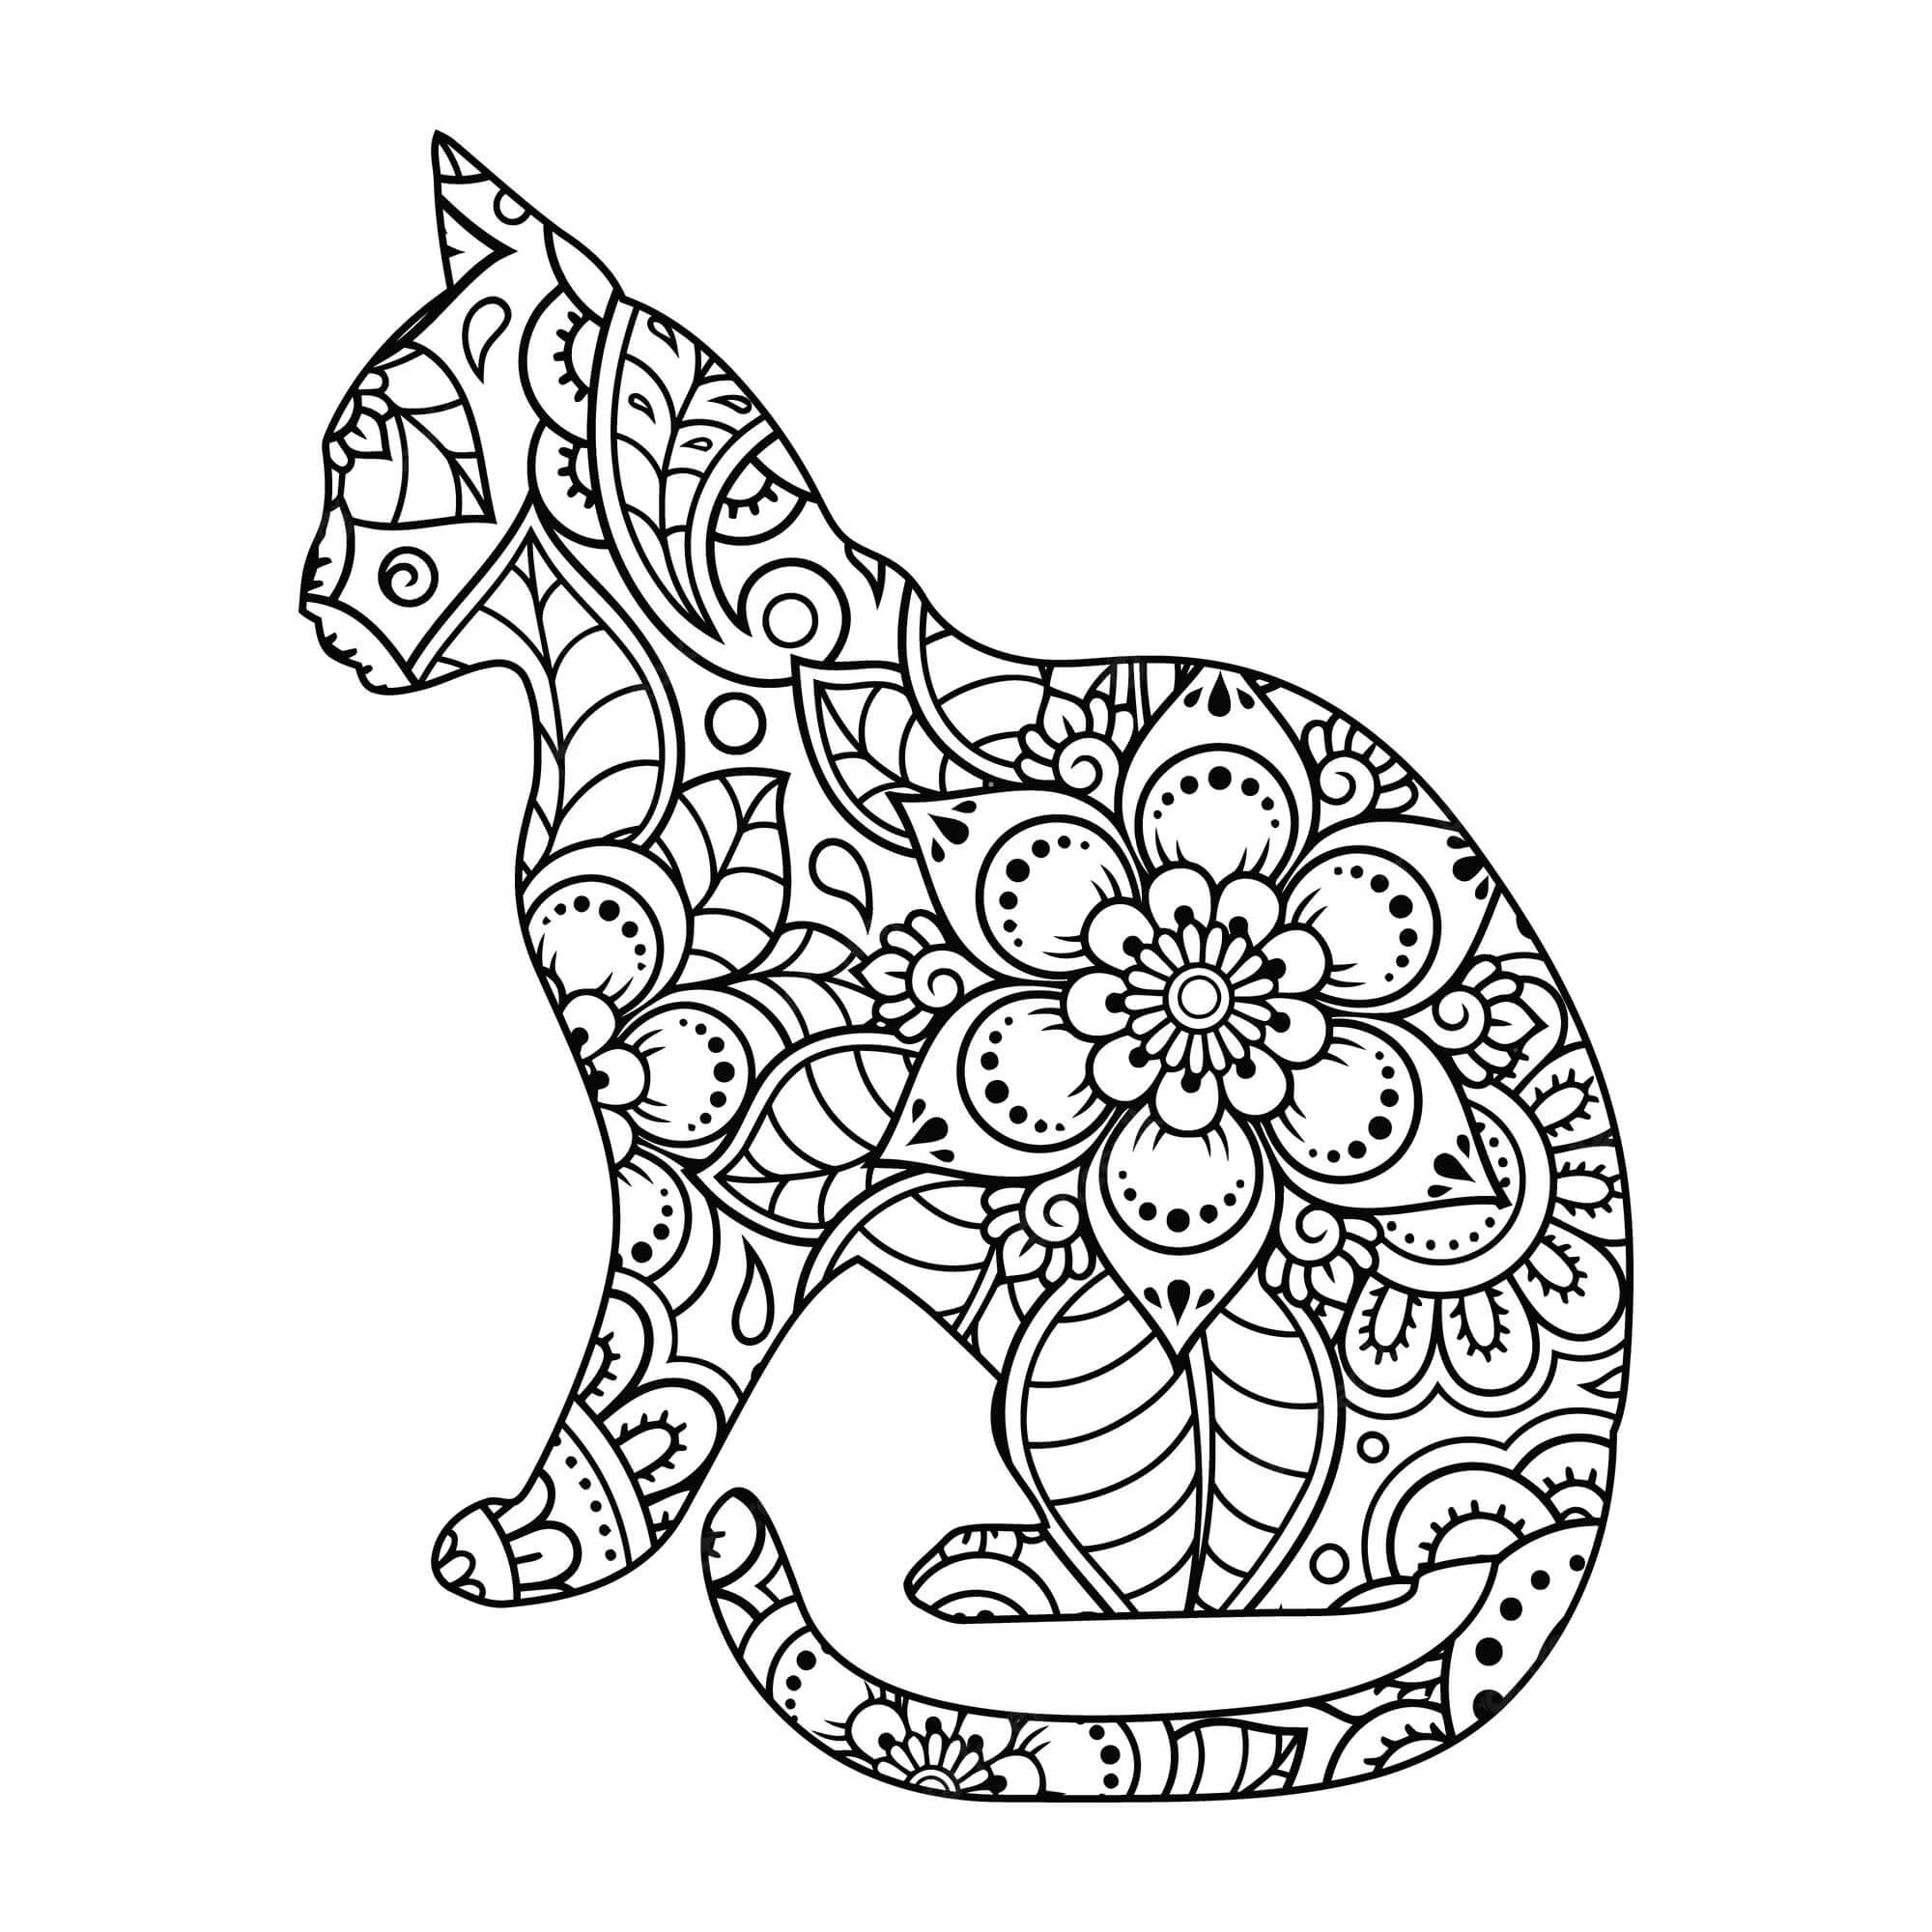 Mandala Cat Coloring Page – Sheet 12 - Download, Print Now!